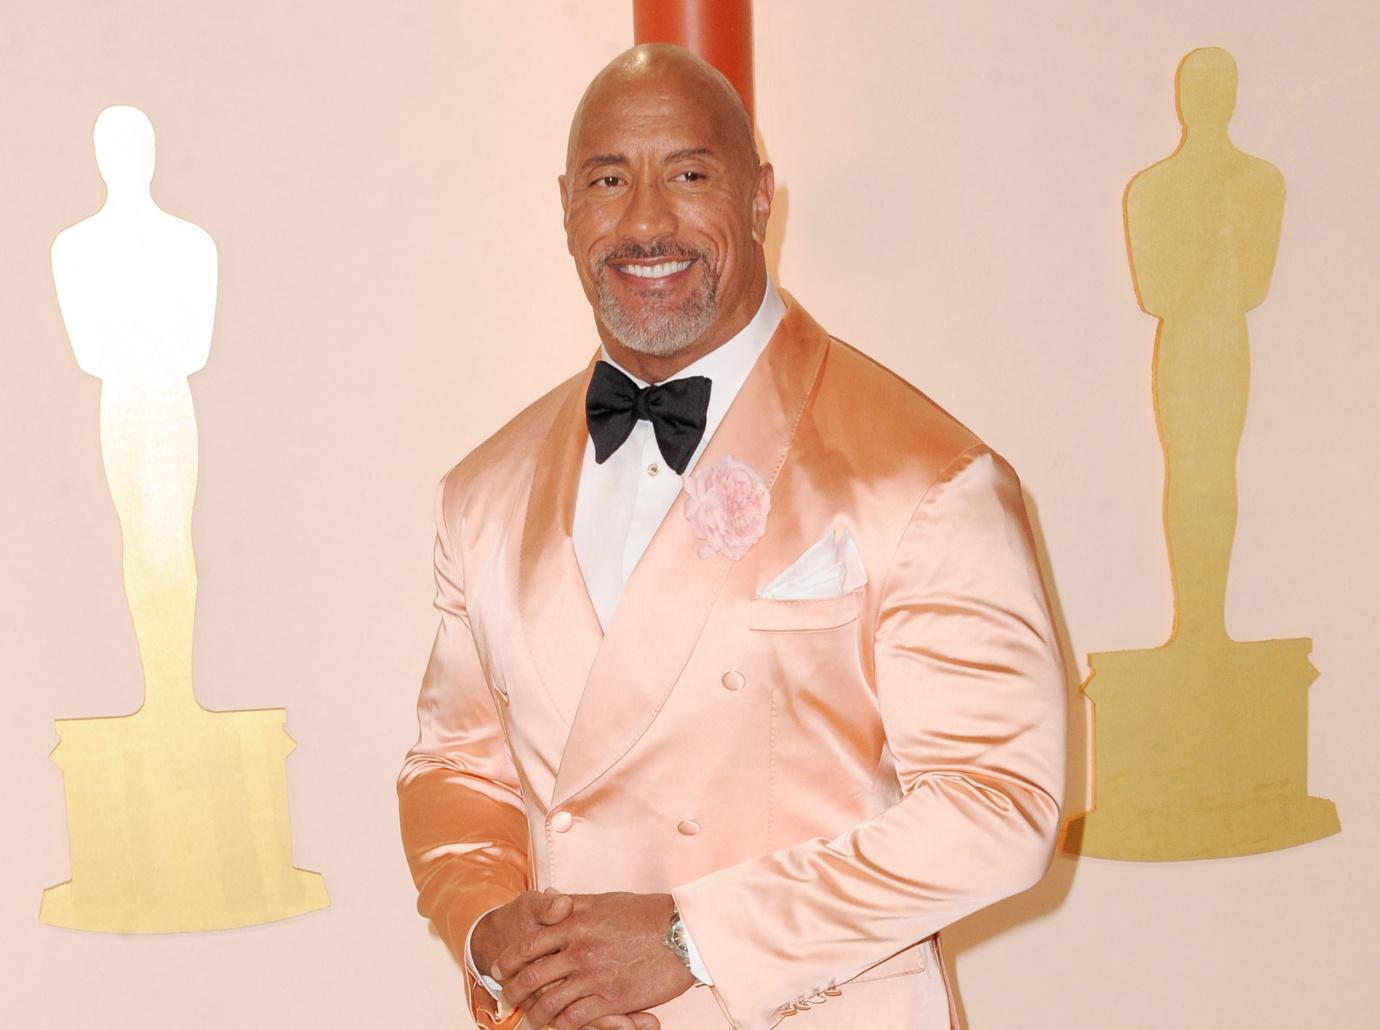 Dwayne 'The Rock' Johnson slams 'absurd' claims he promoted Black